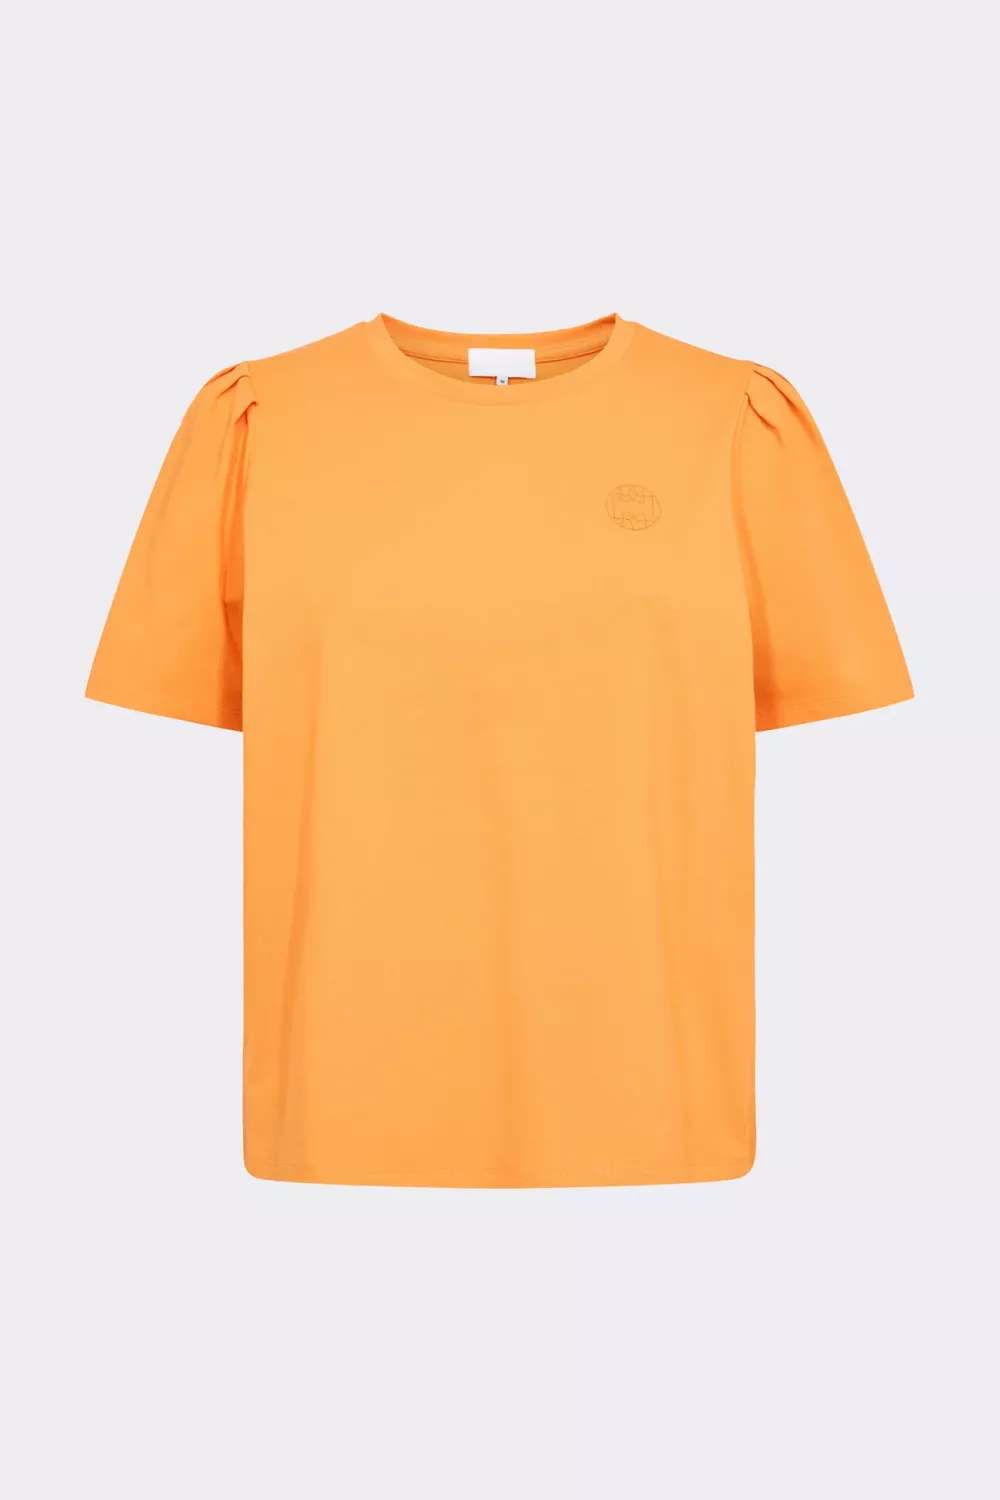 LR-Isol 1 T-shirt Flame Orange